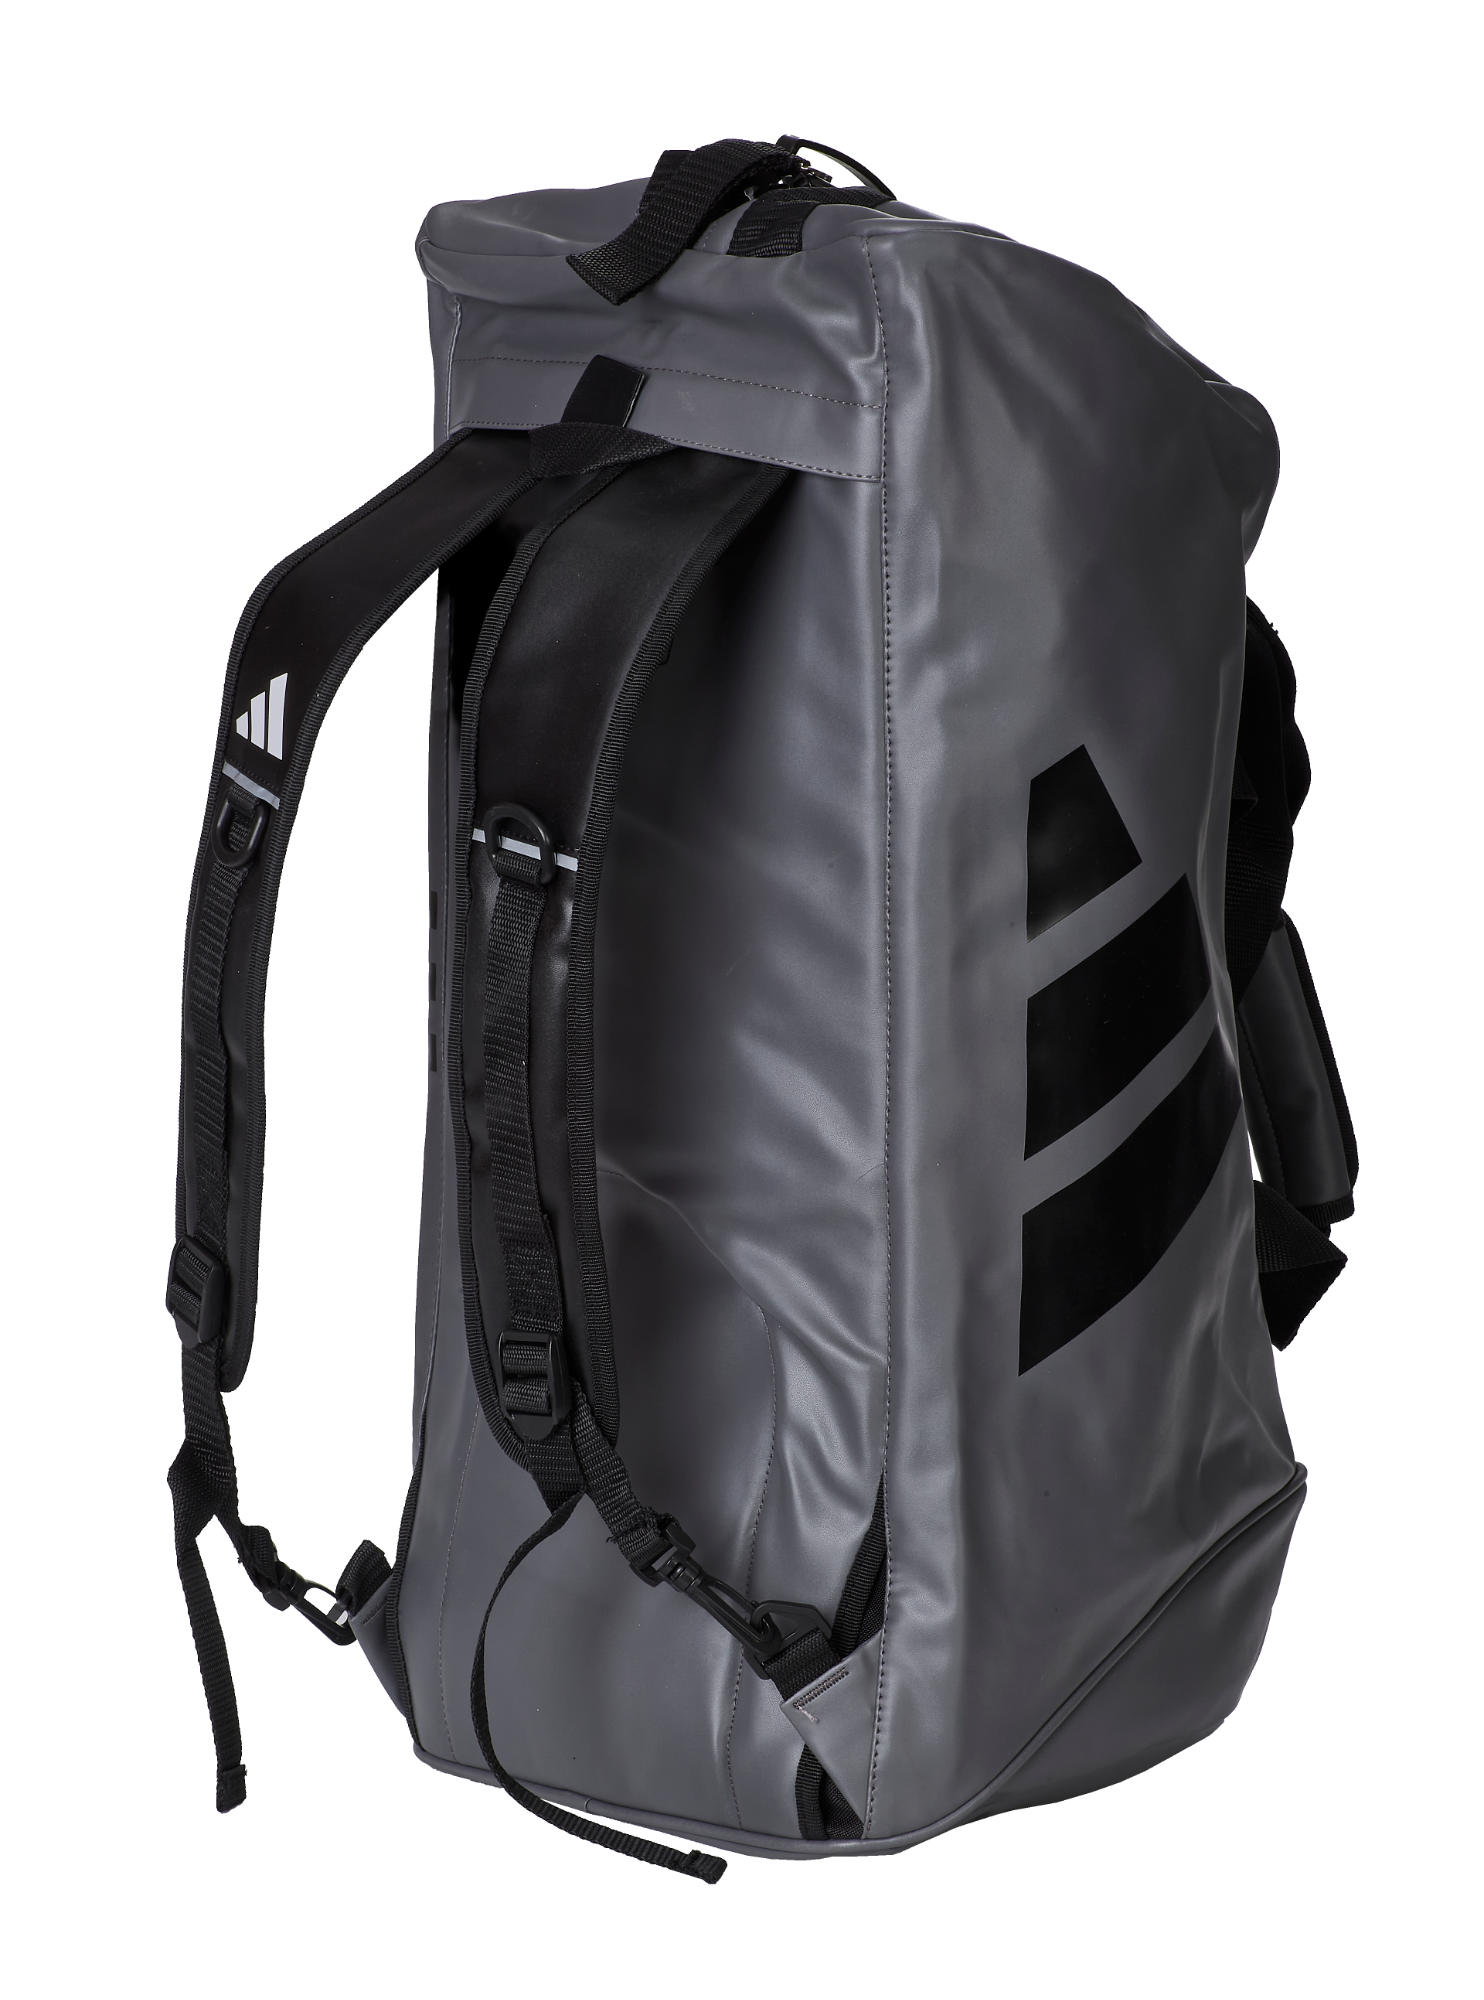 adidas 2in1 Bag Combat Sports grey/black PU, adiACC051